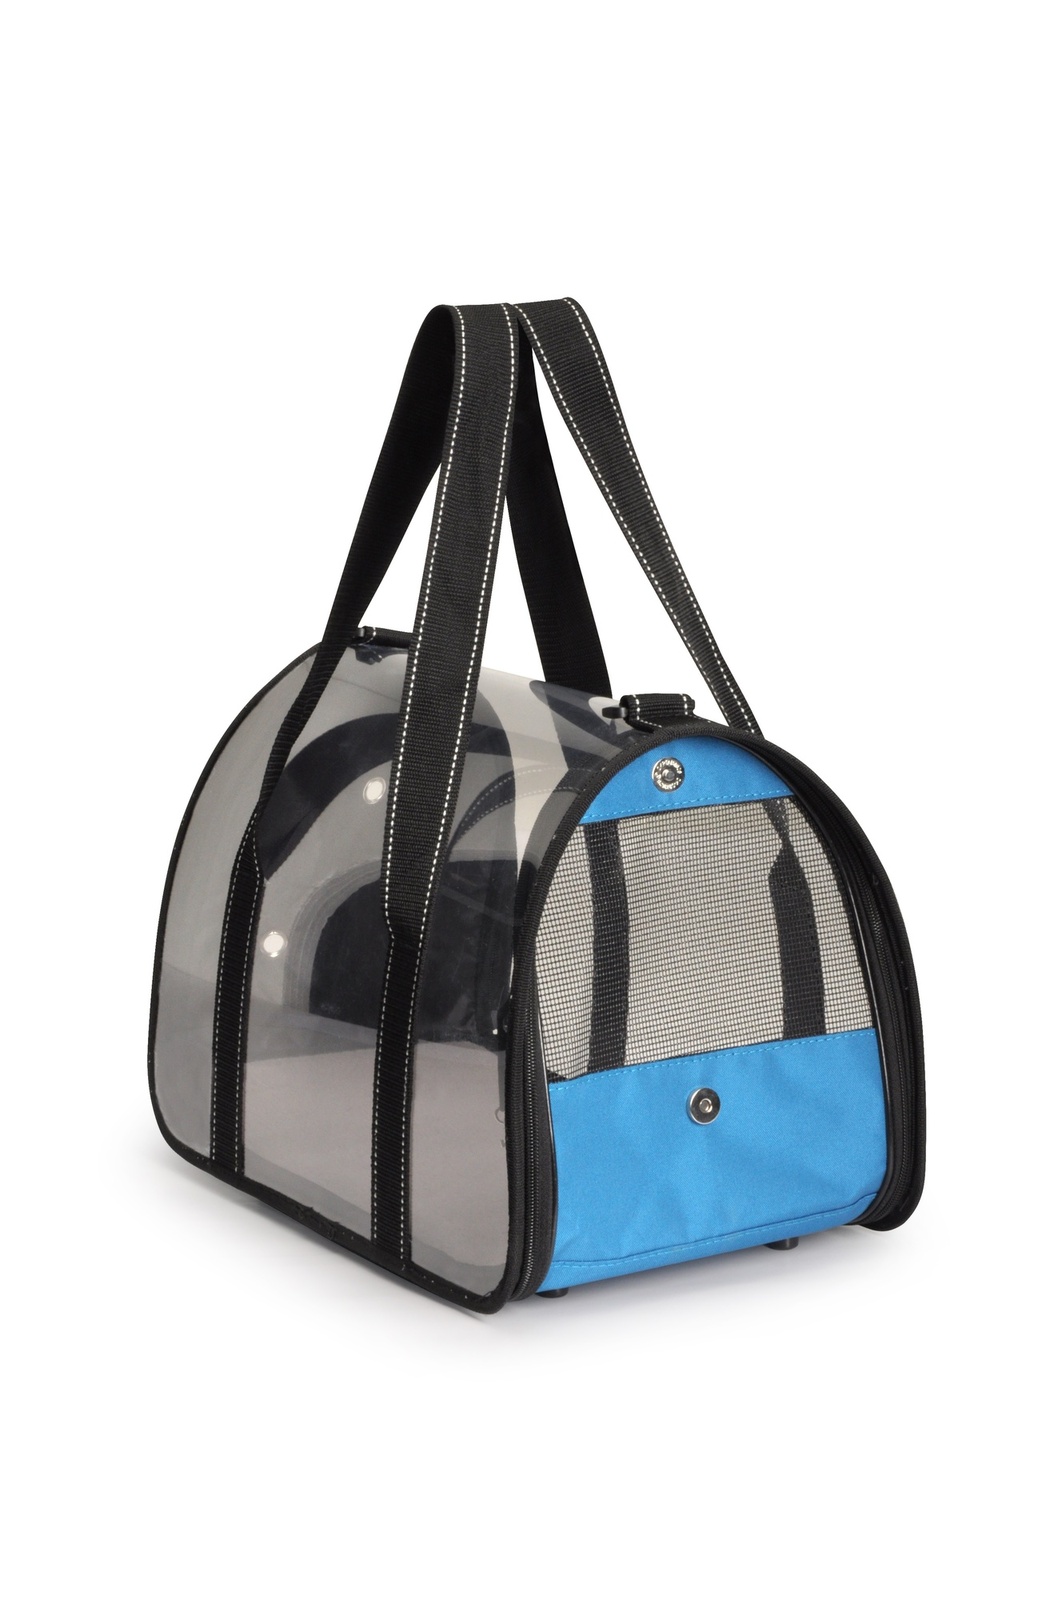 Camon Camon сумка-переноска прозрачная, 42x25x25 см, голубая (670 г) camon camon переноска для домашних животных rhino красная 52 x 34 5 x 33 см 1 56 кг